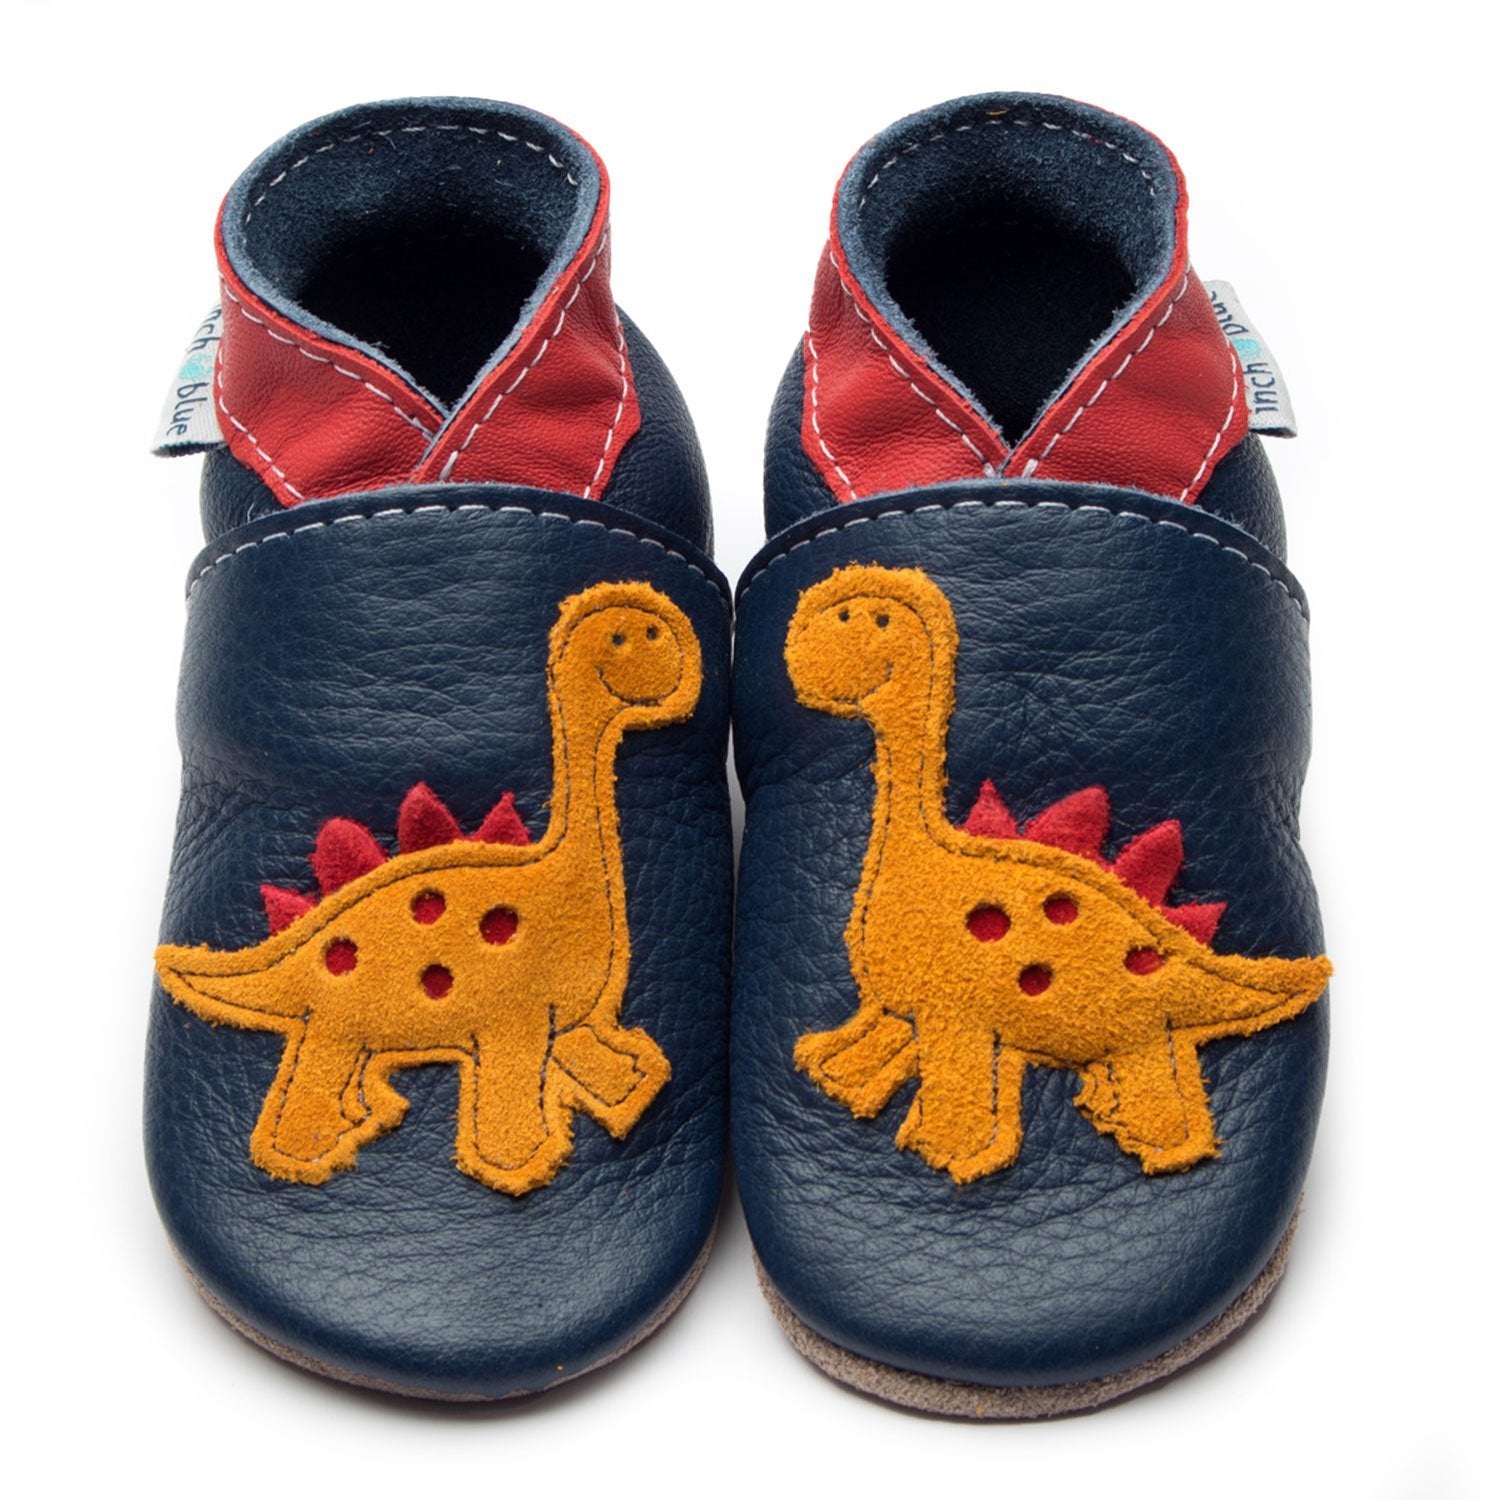 Inch Blue Baby Shoes Dino Navy 2490 Footwear 0-6M / Navy,6-12M / Navy,12-18M / Navy